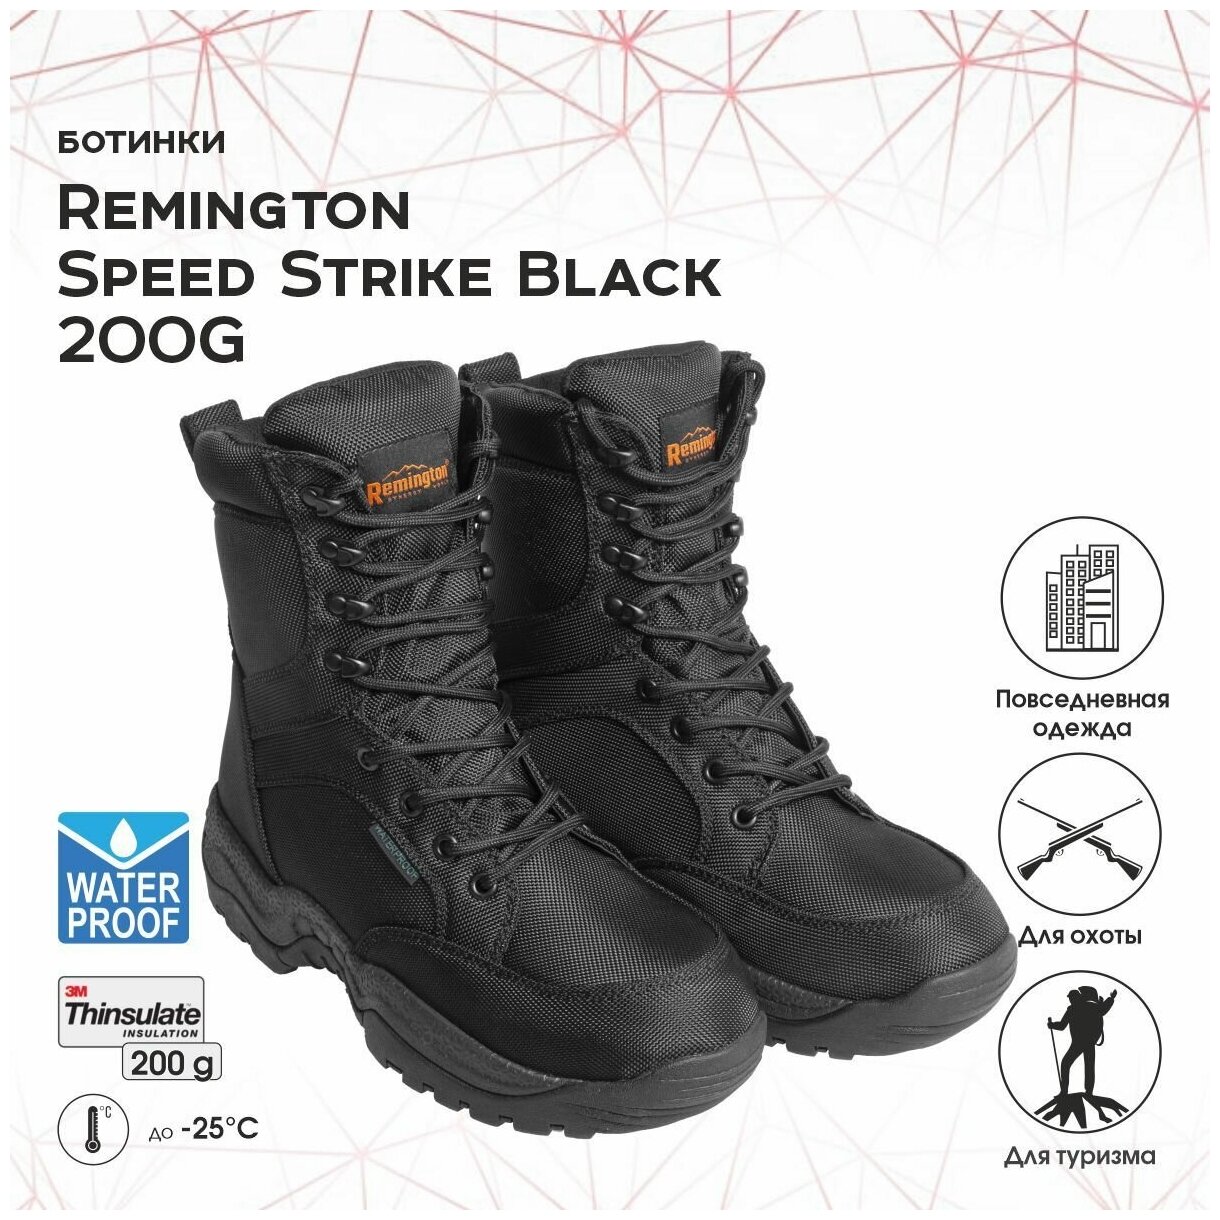 Ботинки Reminton Speed Strike Black 200g thinsulate р. 43